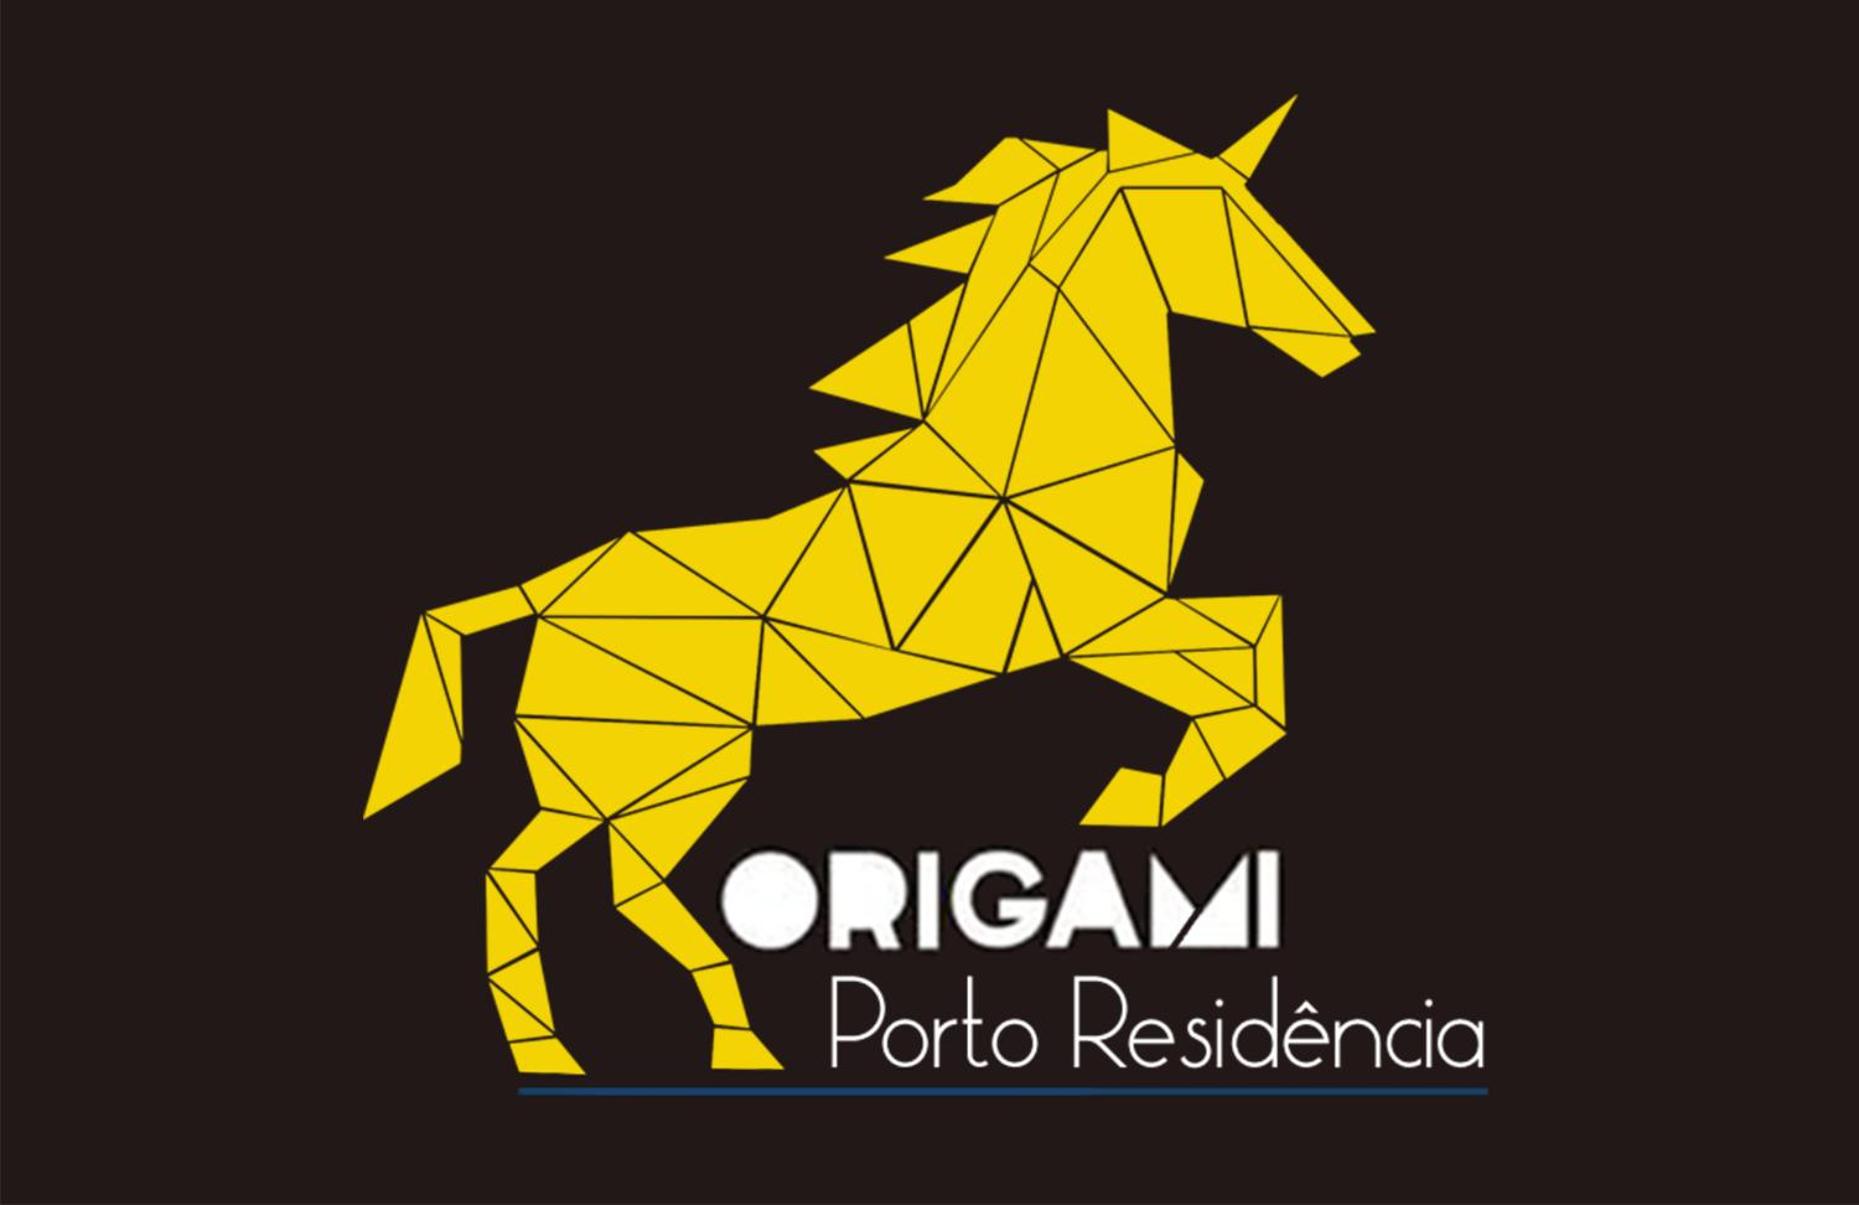 Origami Porto Residência